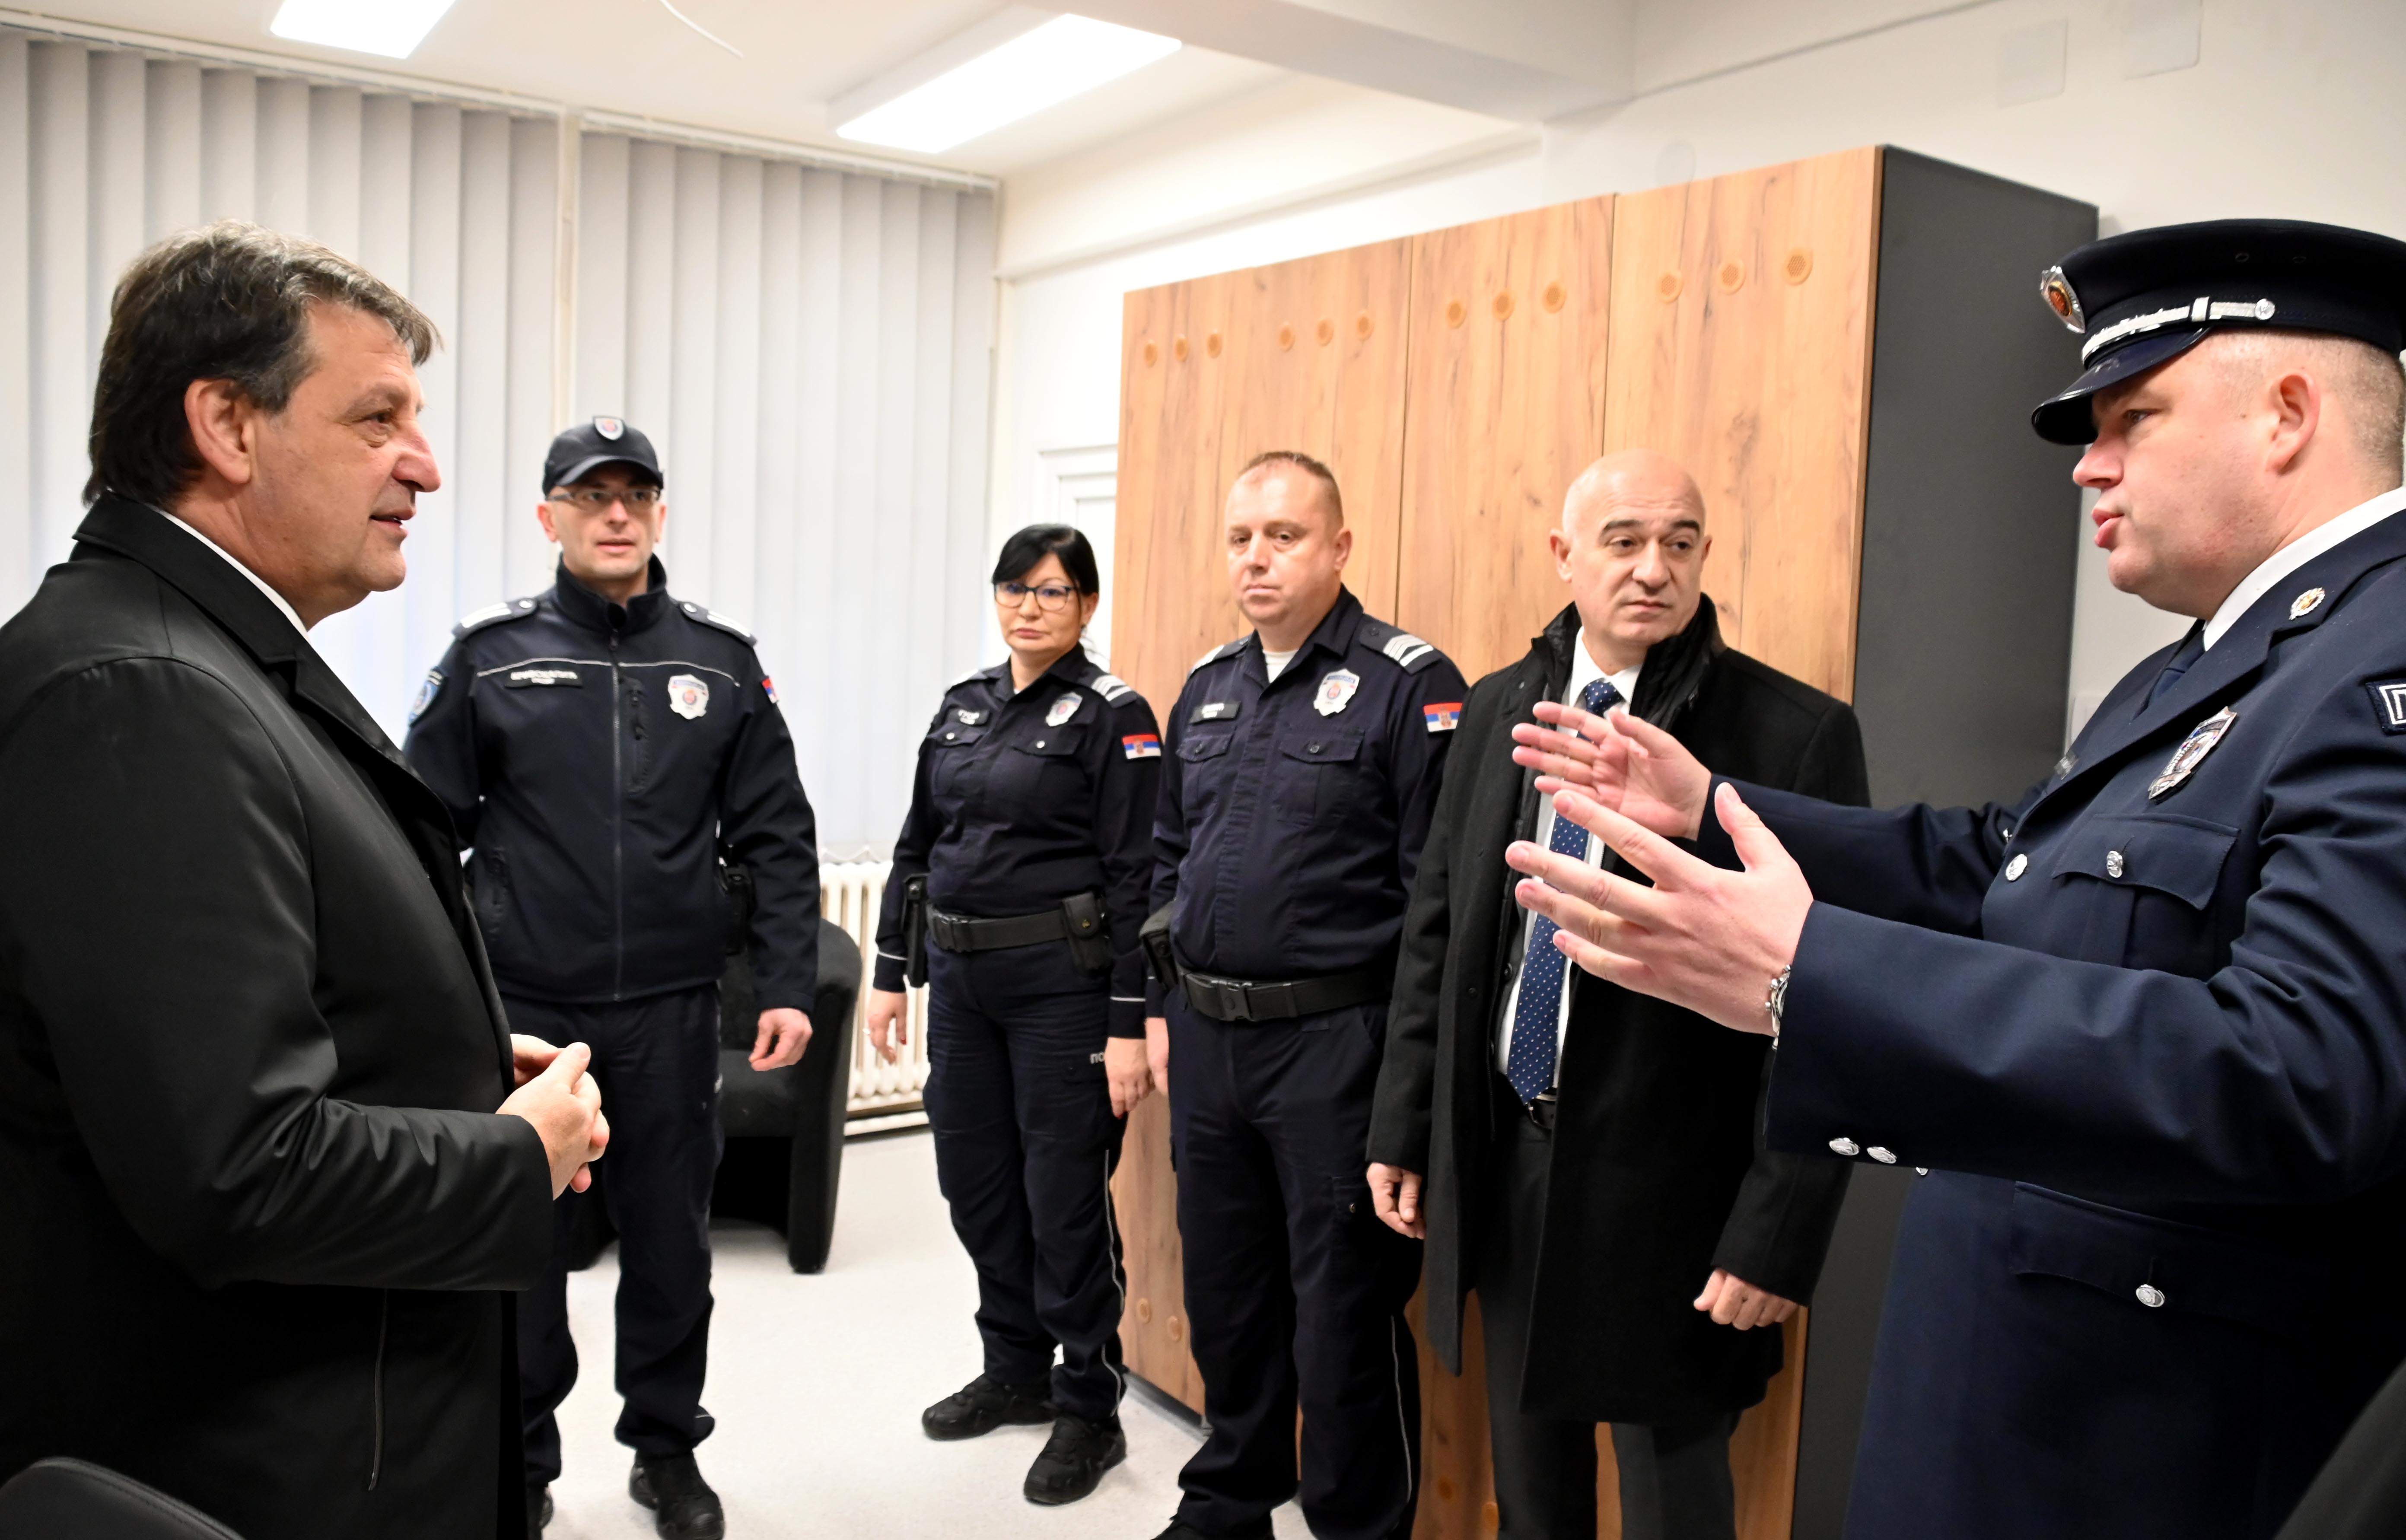 Ministar unutrašnjih poslova Bratislav Gašić obišao kompletno renoviran objekat Policijske ispostave u Subotici